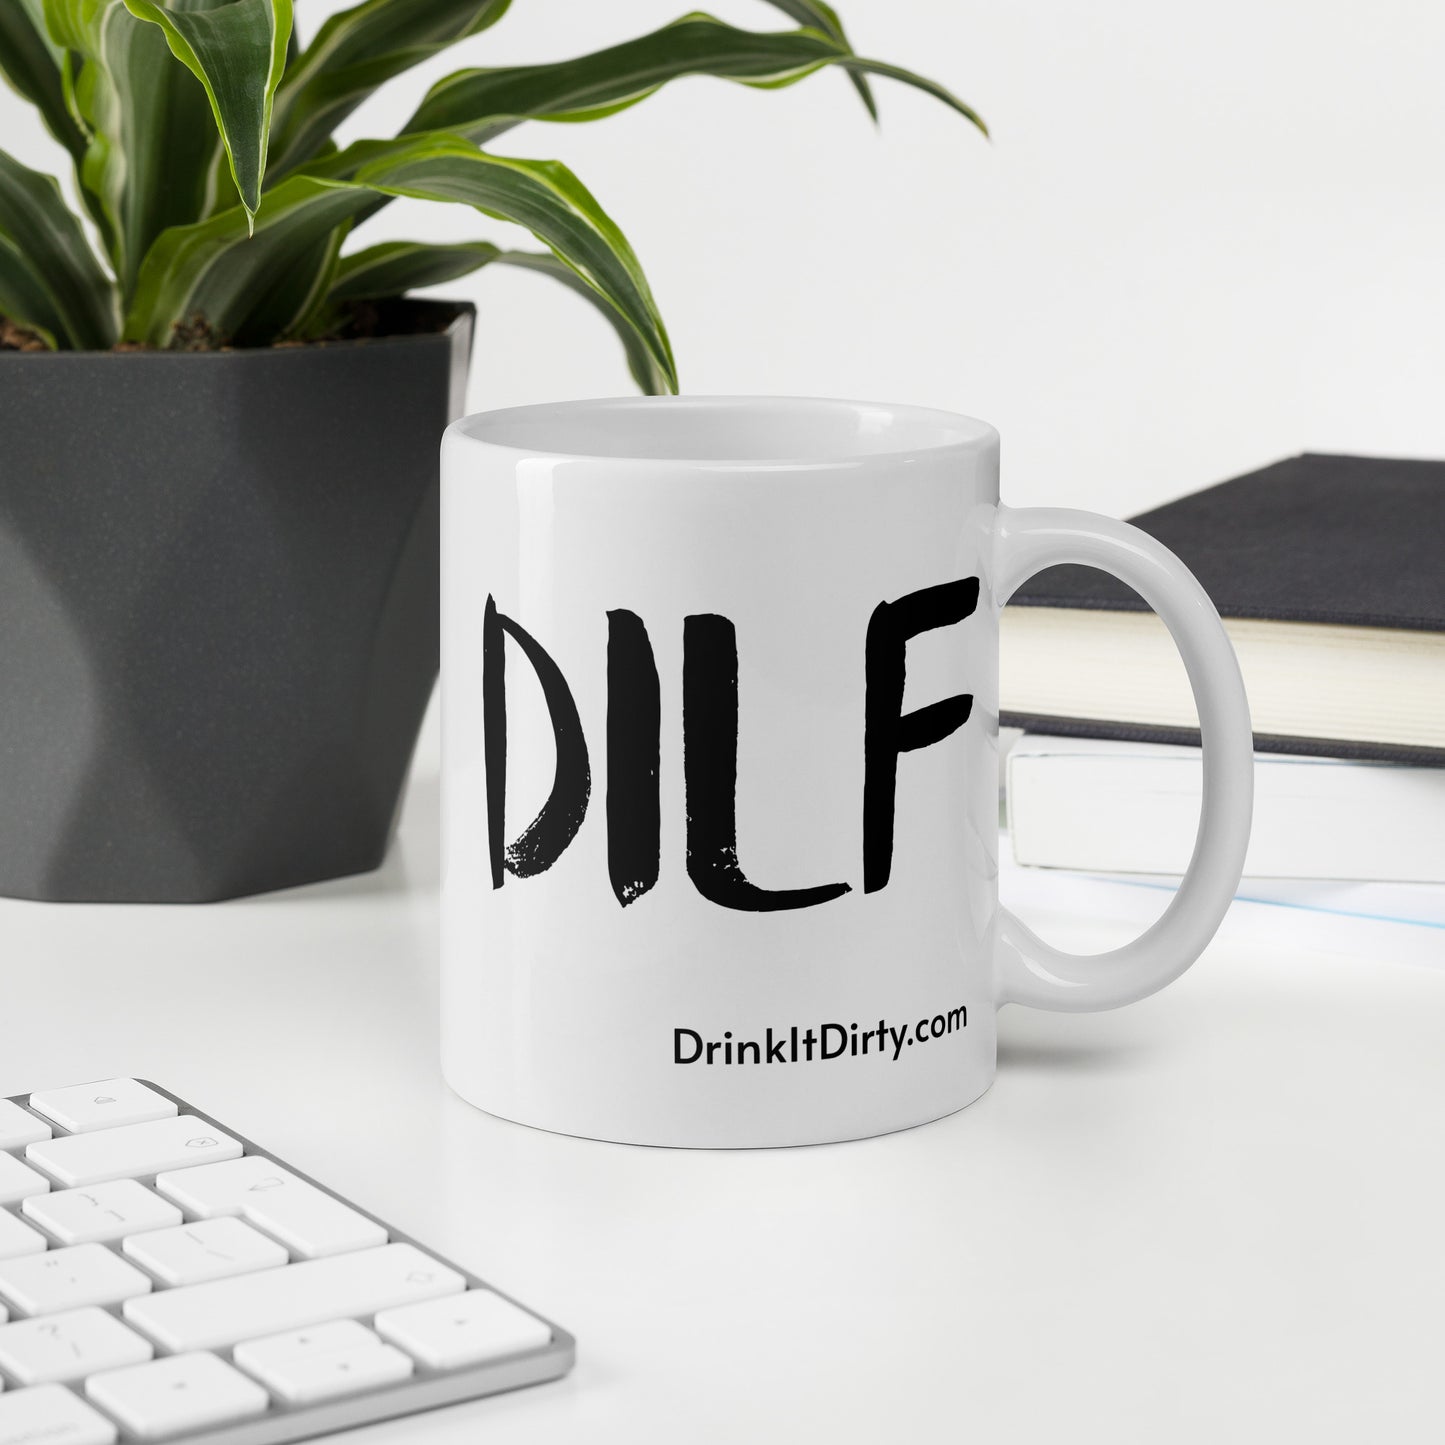 DILF Coffee Mug Drink It Dirty